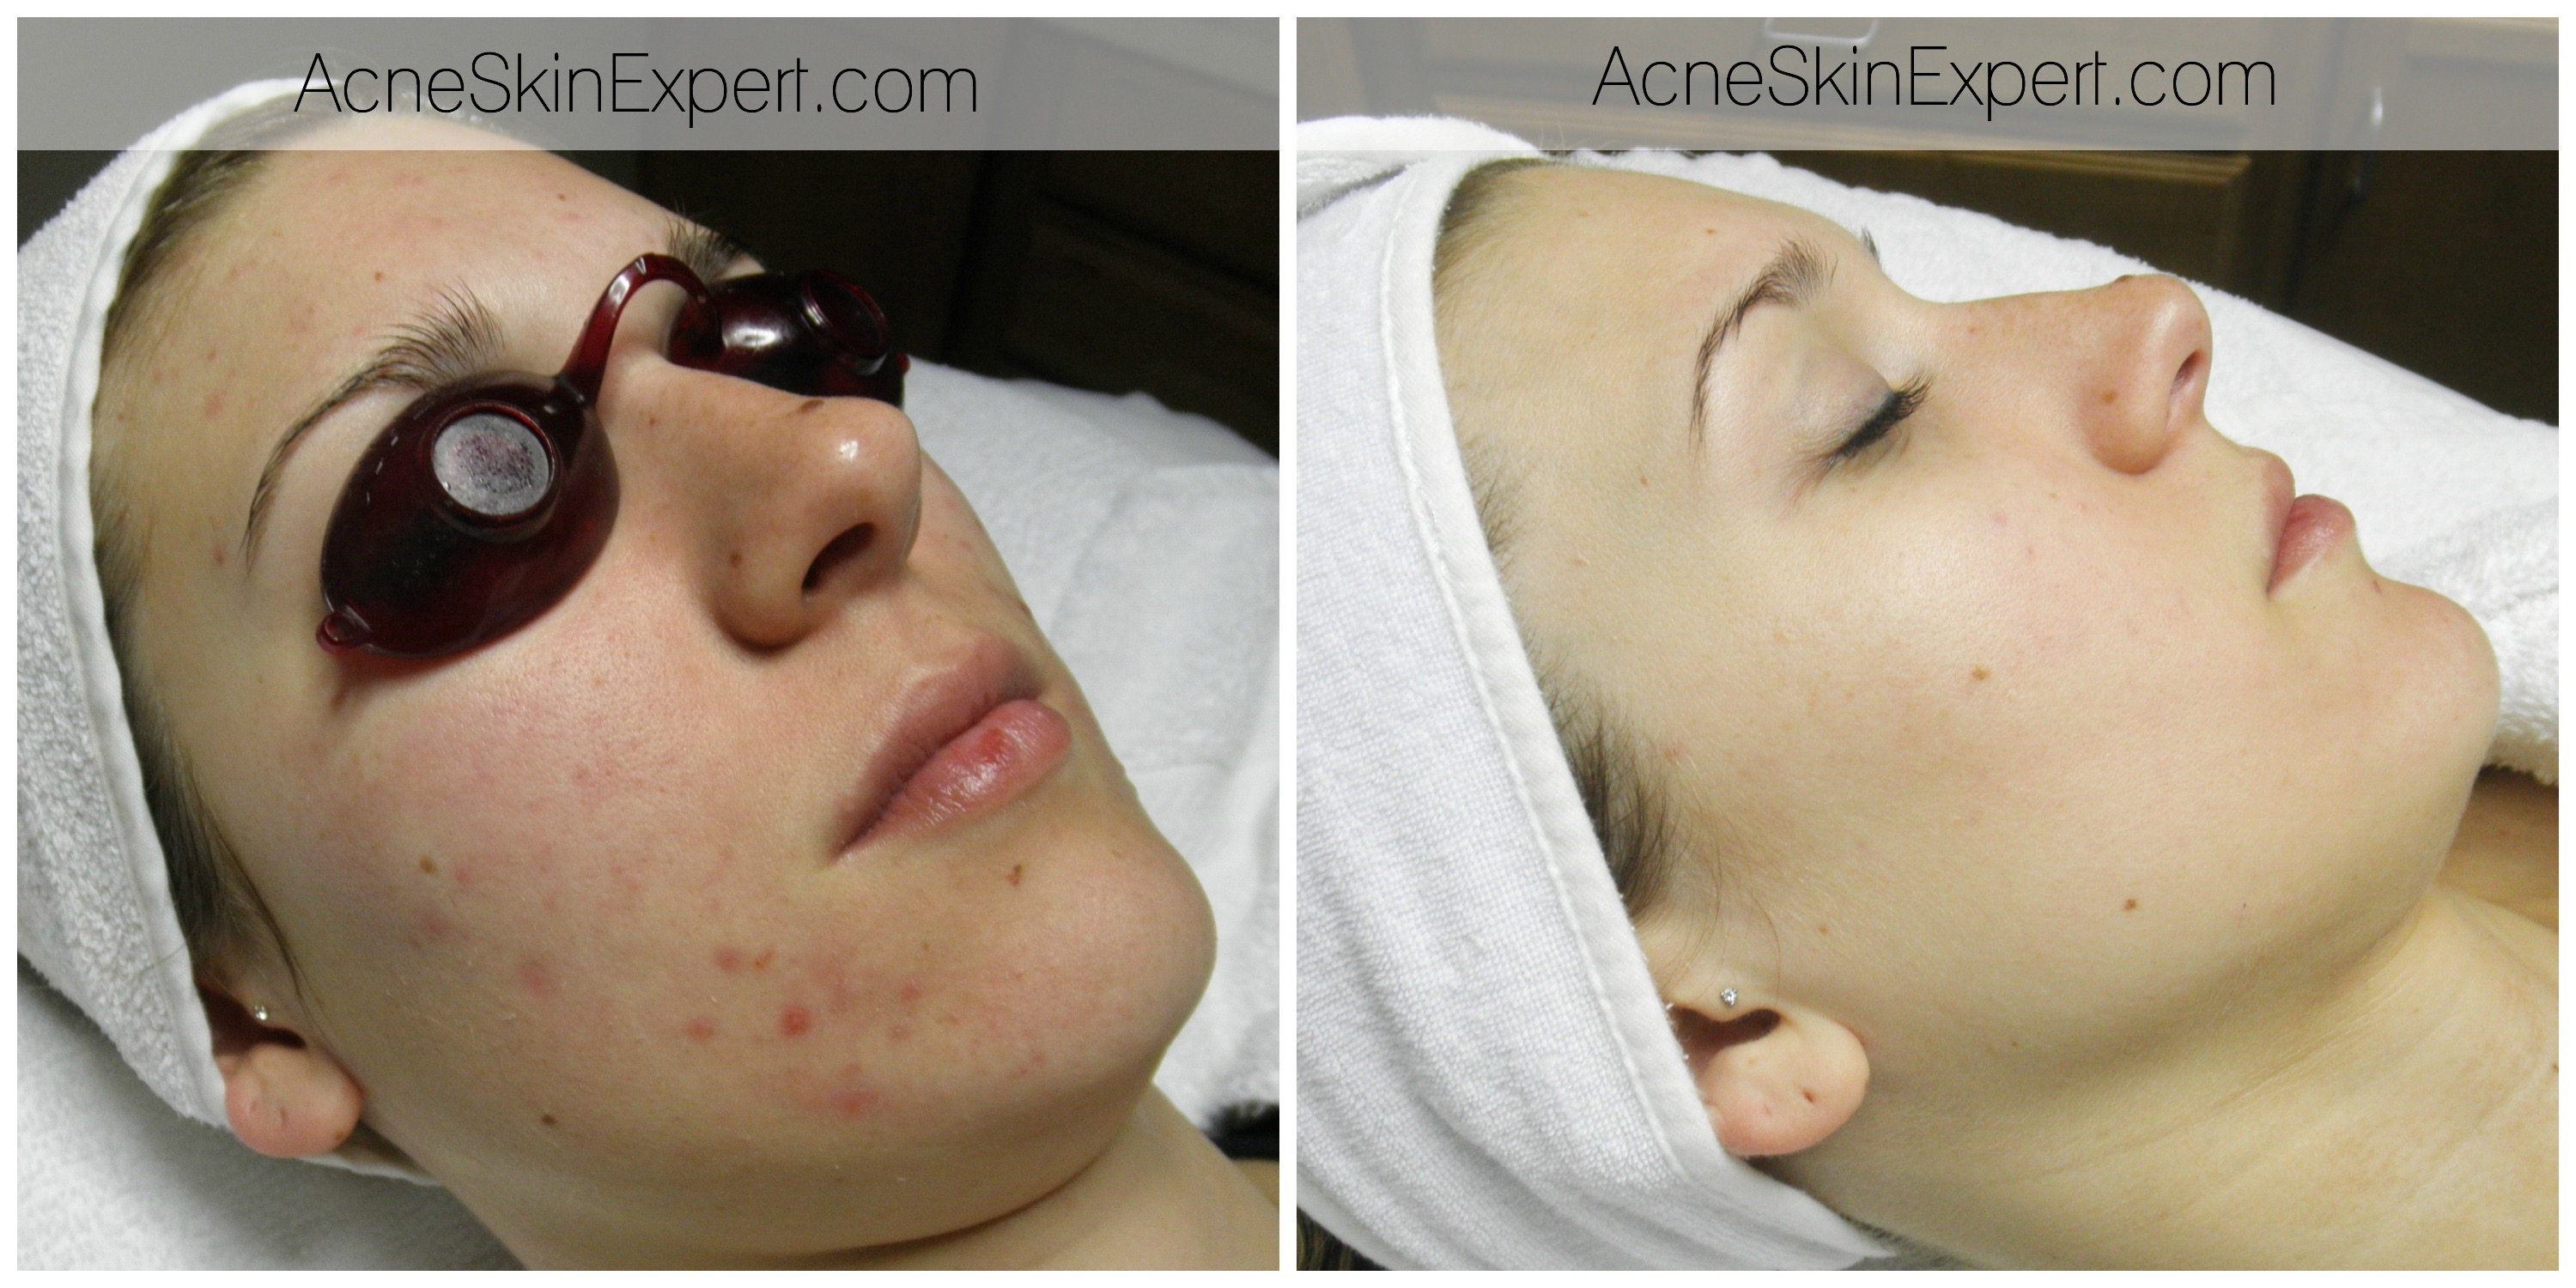 acne-sensitive-skin-treatment-AcneSkinExpert.com